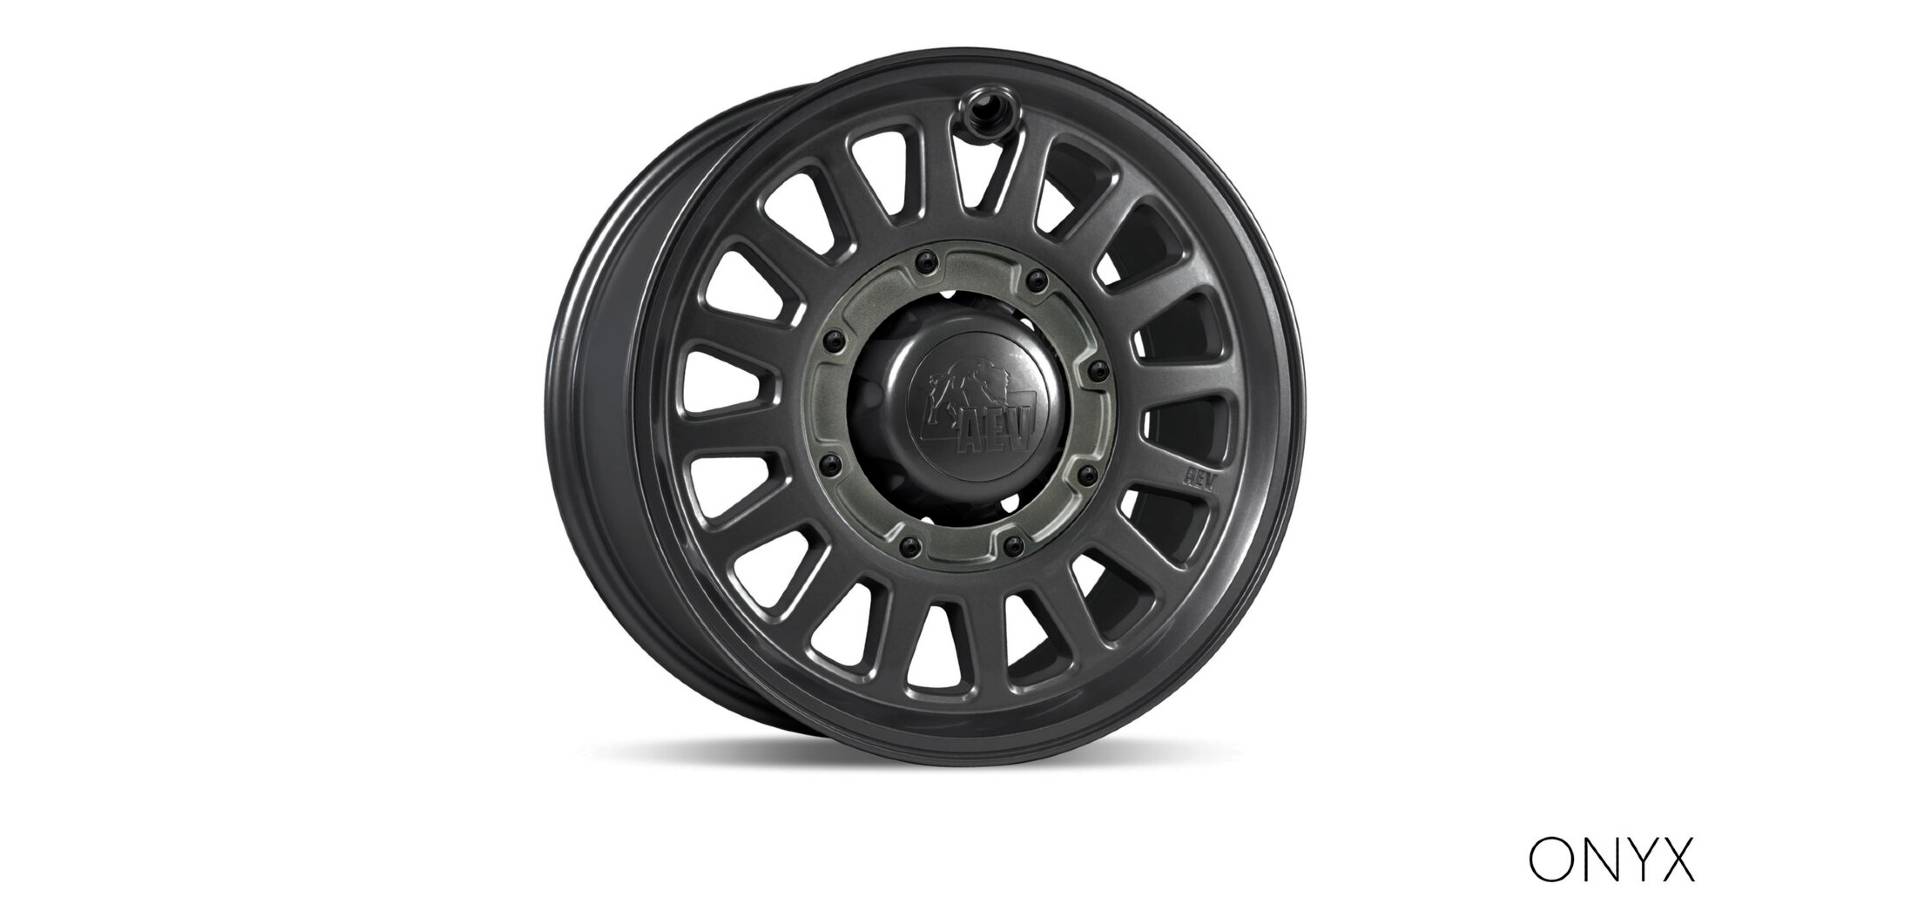 Ram Salta HD Wheel - Onyx with optional Trim Ring